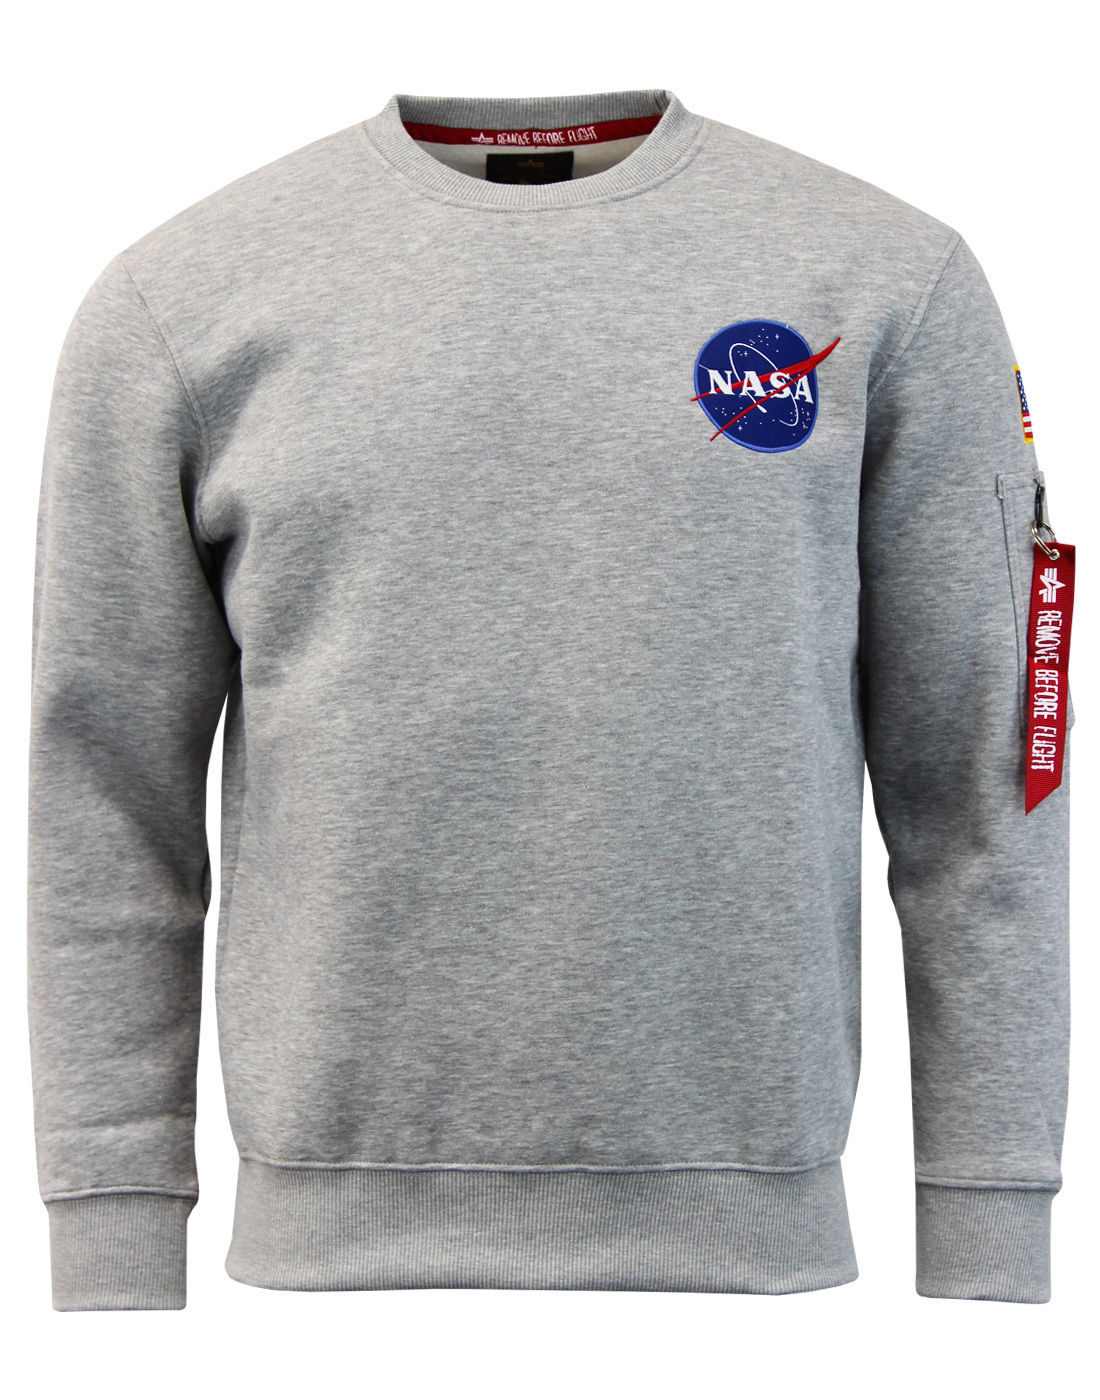 ALPHA INDUSTRIES NASA Space Shuttle Retro 70s Sweatshirt in Grey